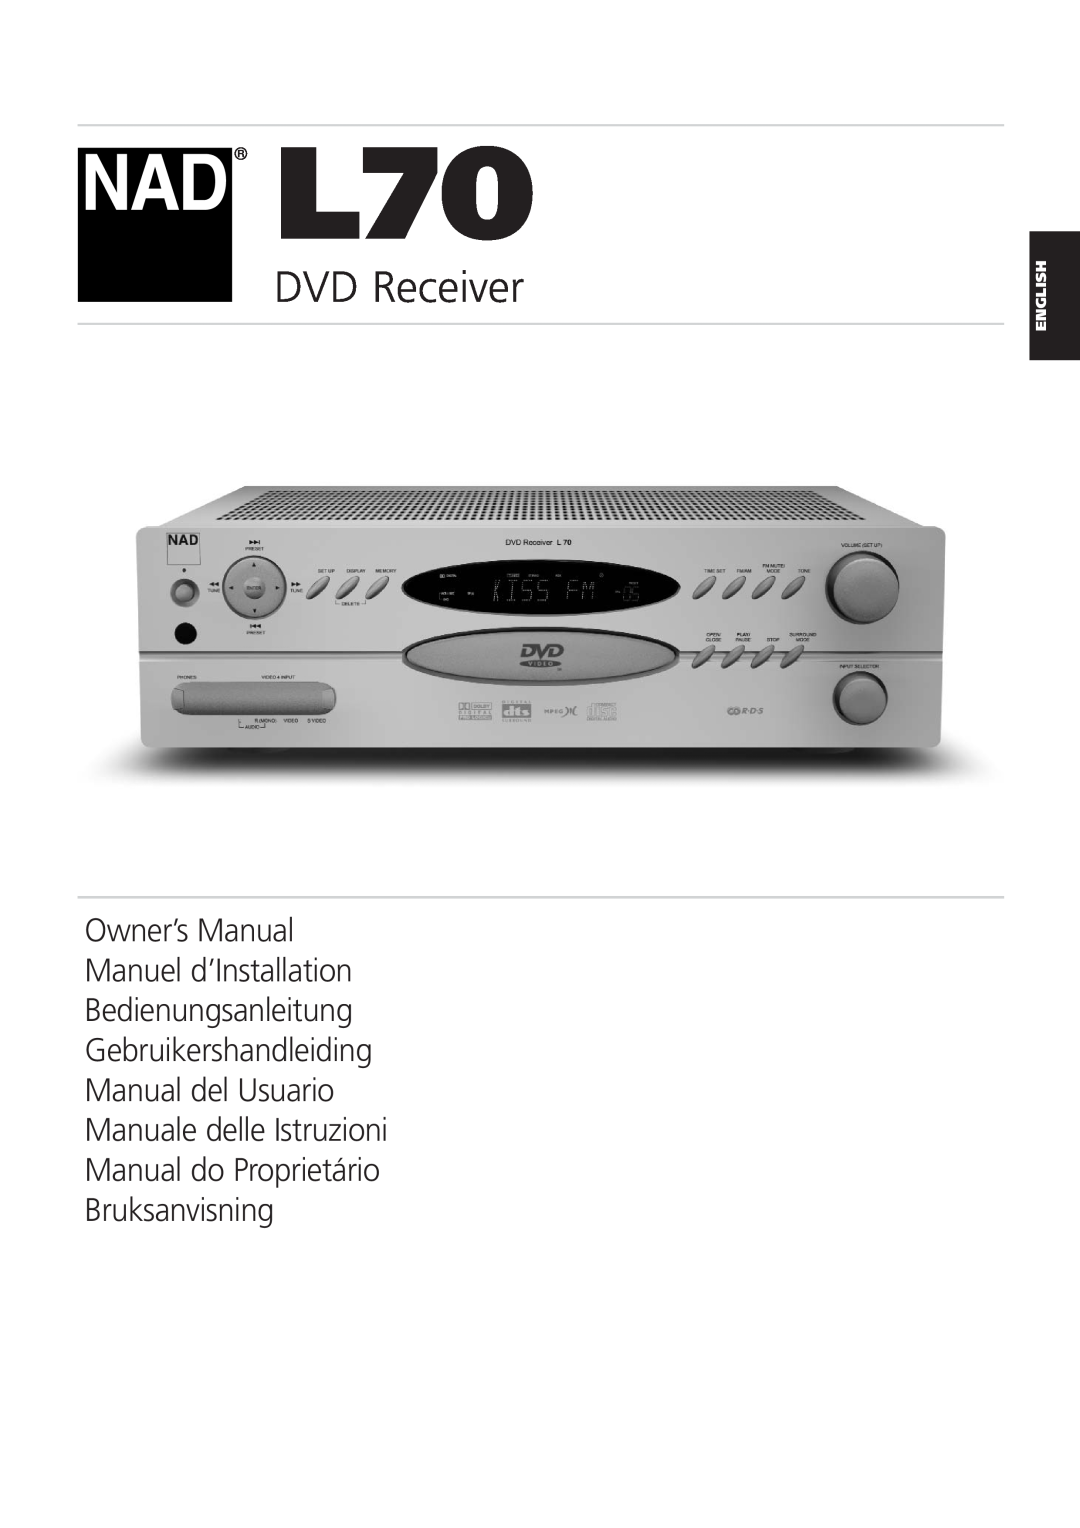 NAD L70 owner manual DVD Receiver, Bedienungsanleitung Gebruikershandleiding, Manual del Usuario Manuale delle Istruzioni 